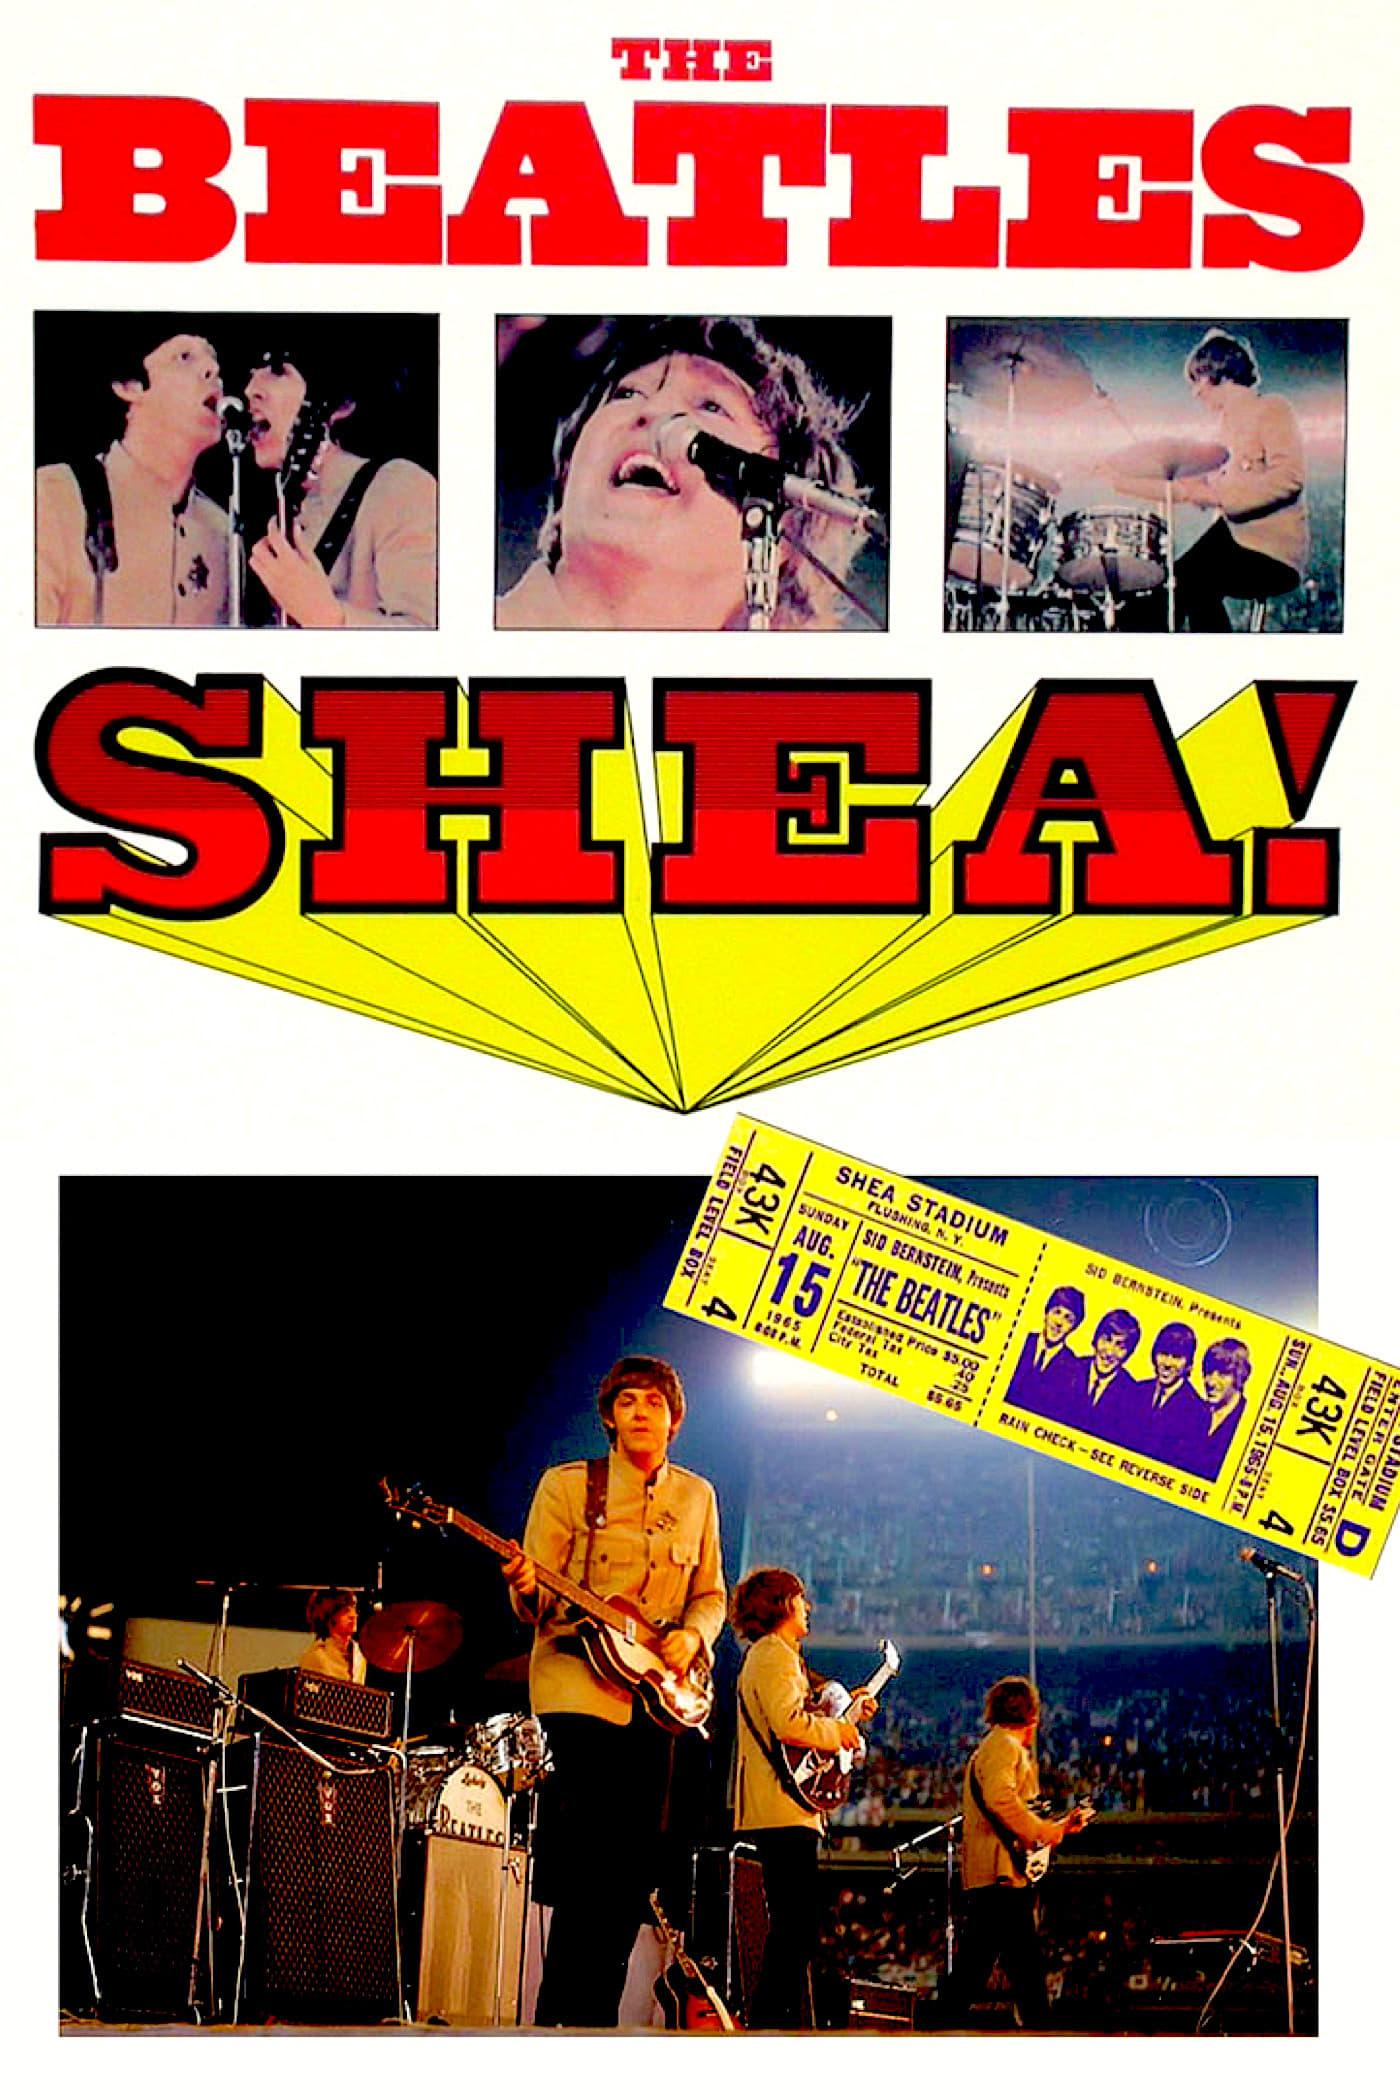 The Beatles at Shea Stadium poster